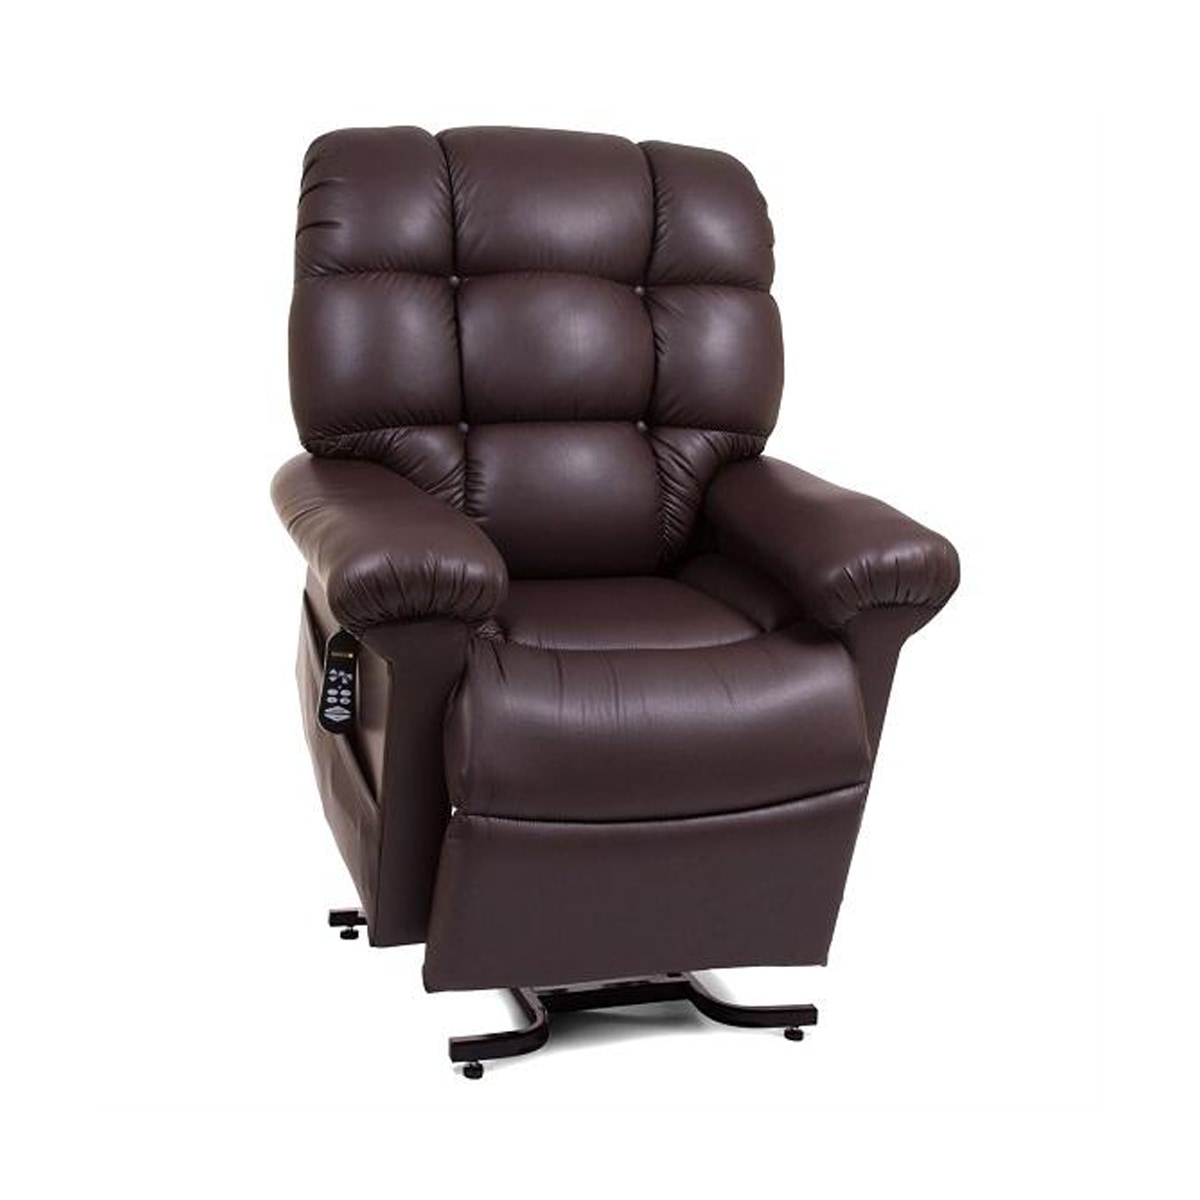 Golden Maxicomfort Cloud 510 lift chair in Brisa coffee bean fabric